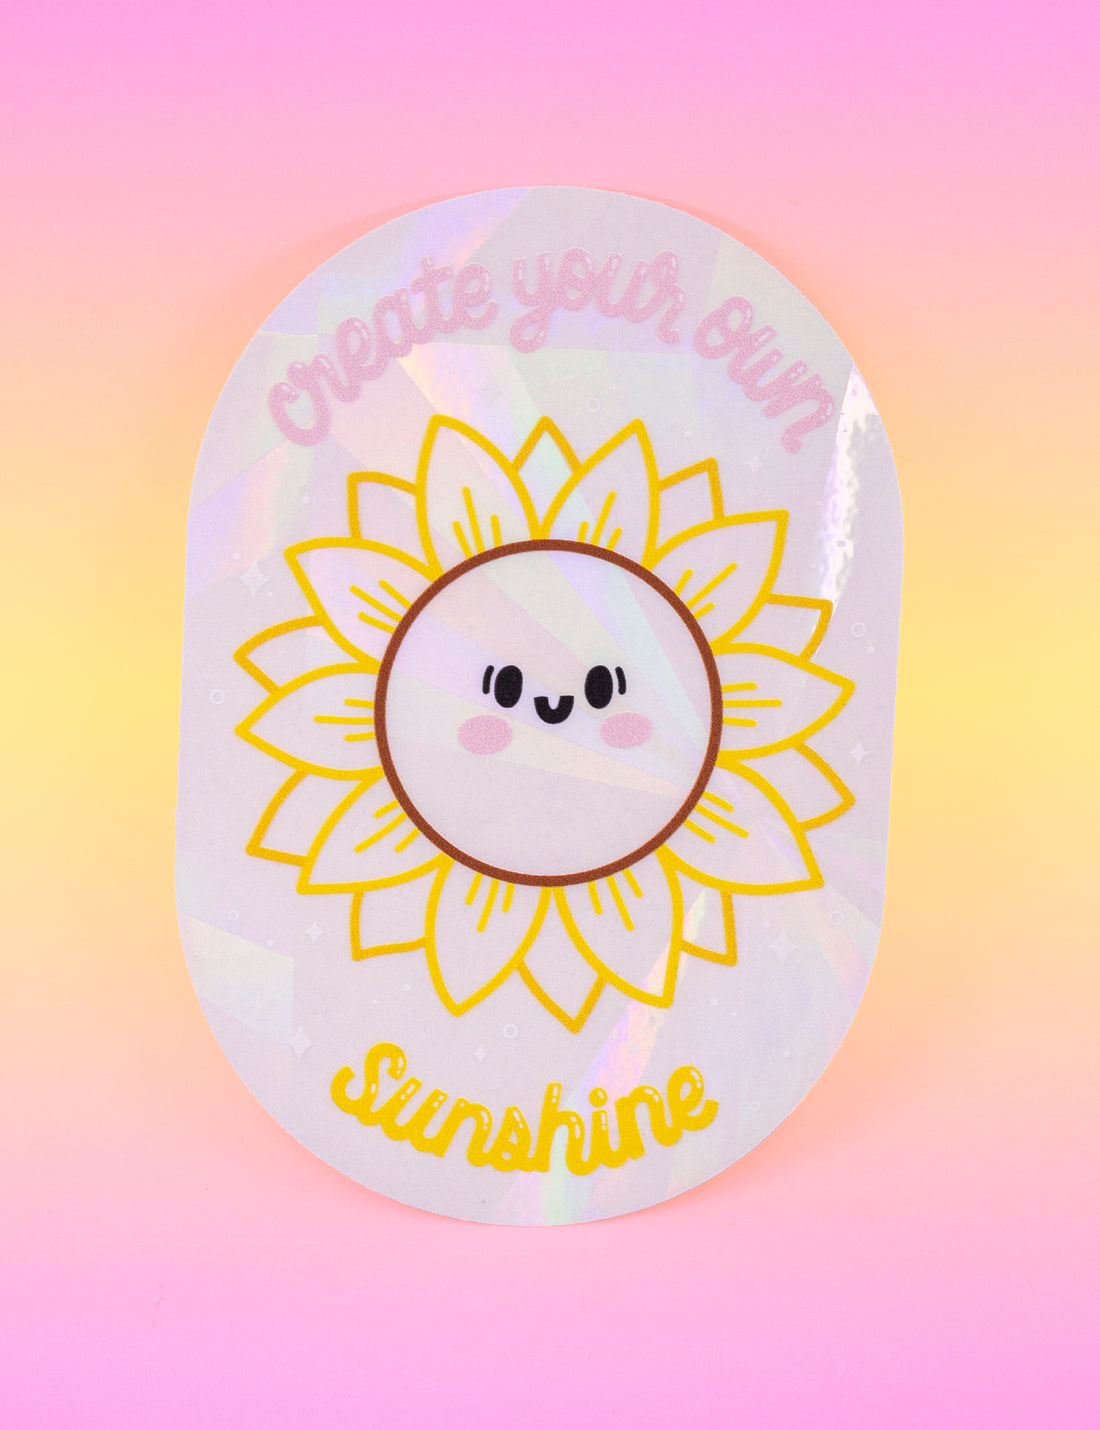 Create your own sunshine sunflower Suncatcher Decal